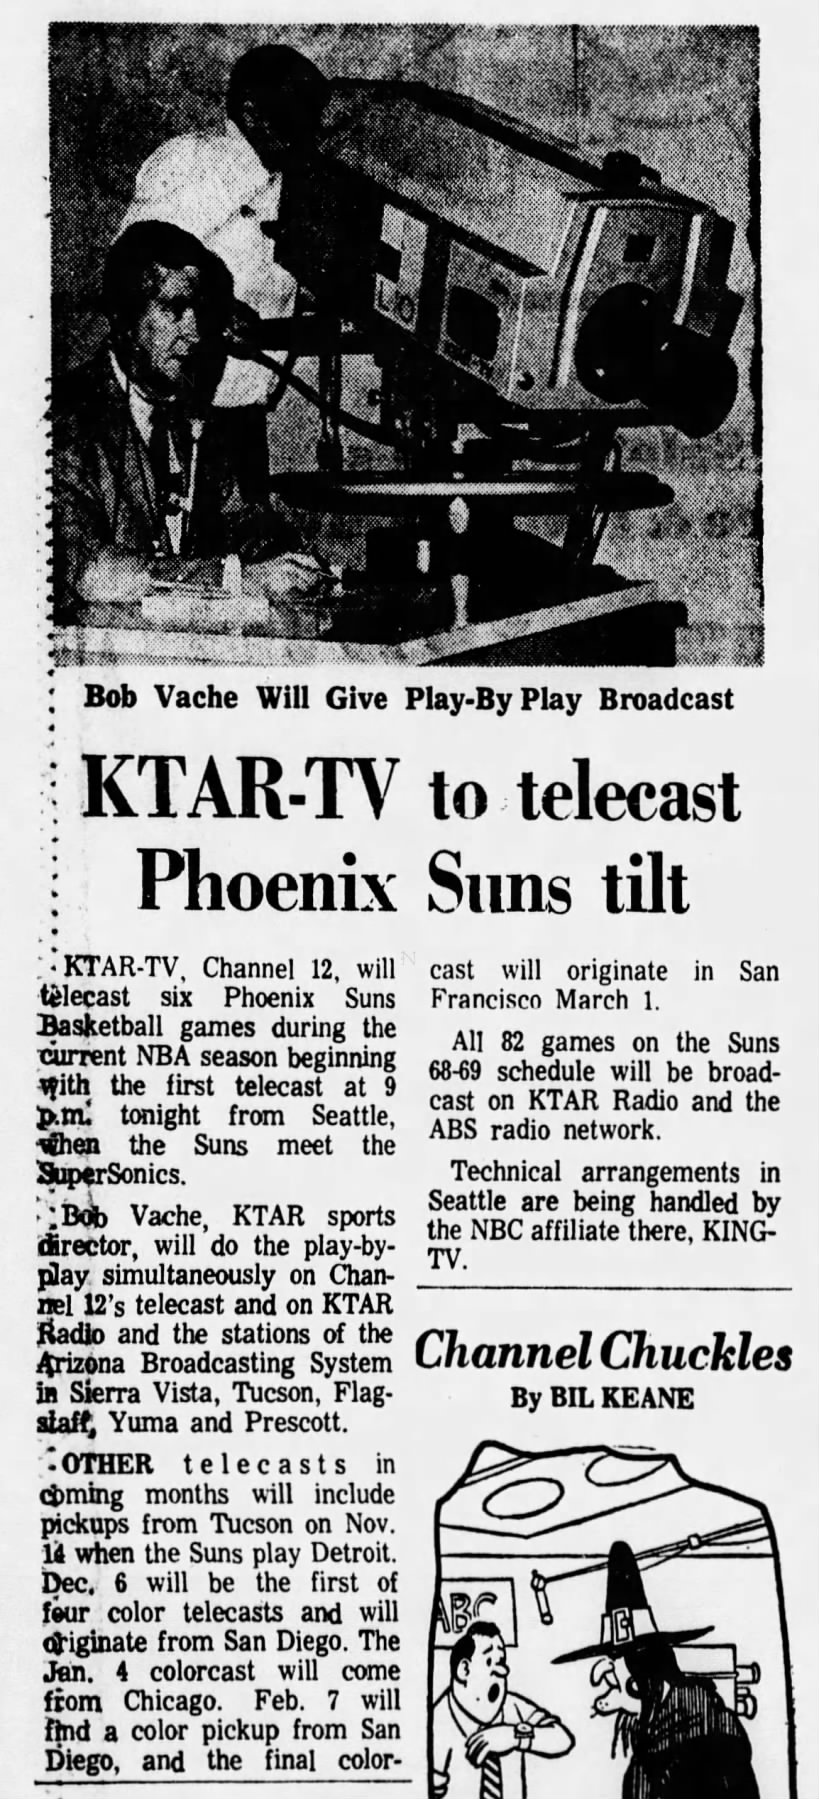 KTAR-TV to telecast Phoenix Suns tilt